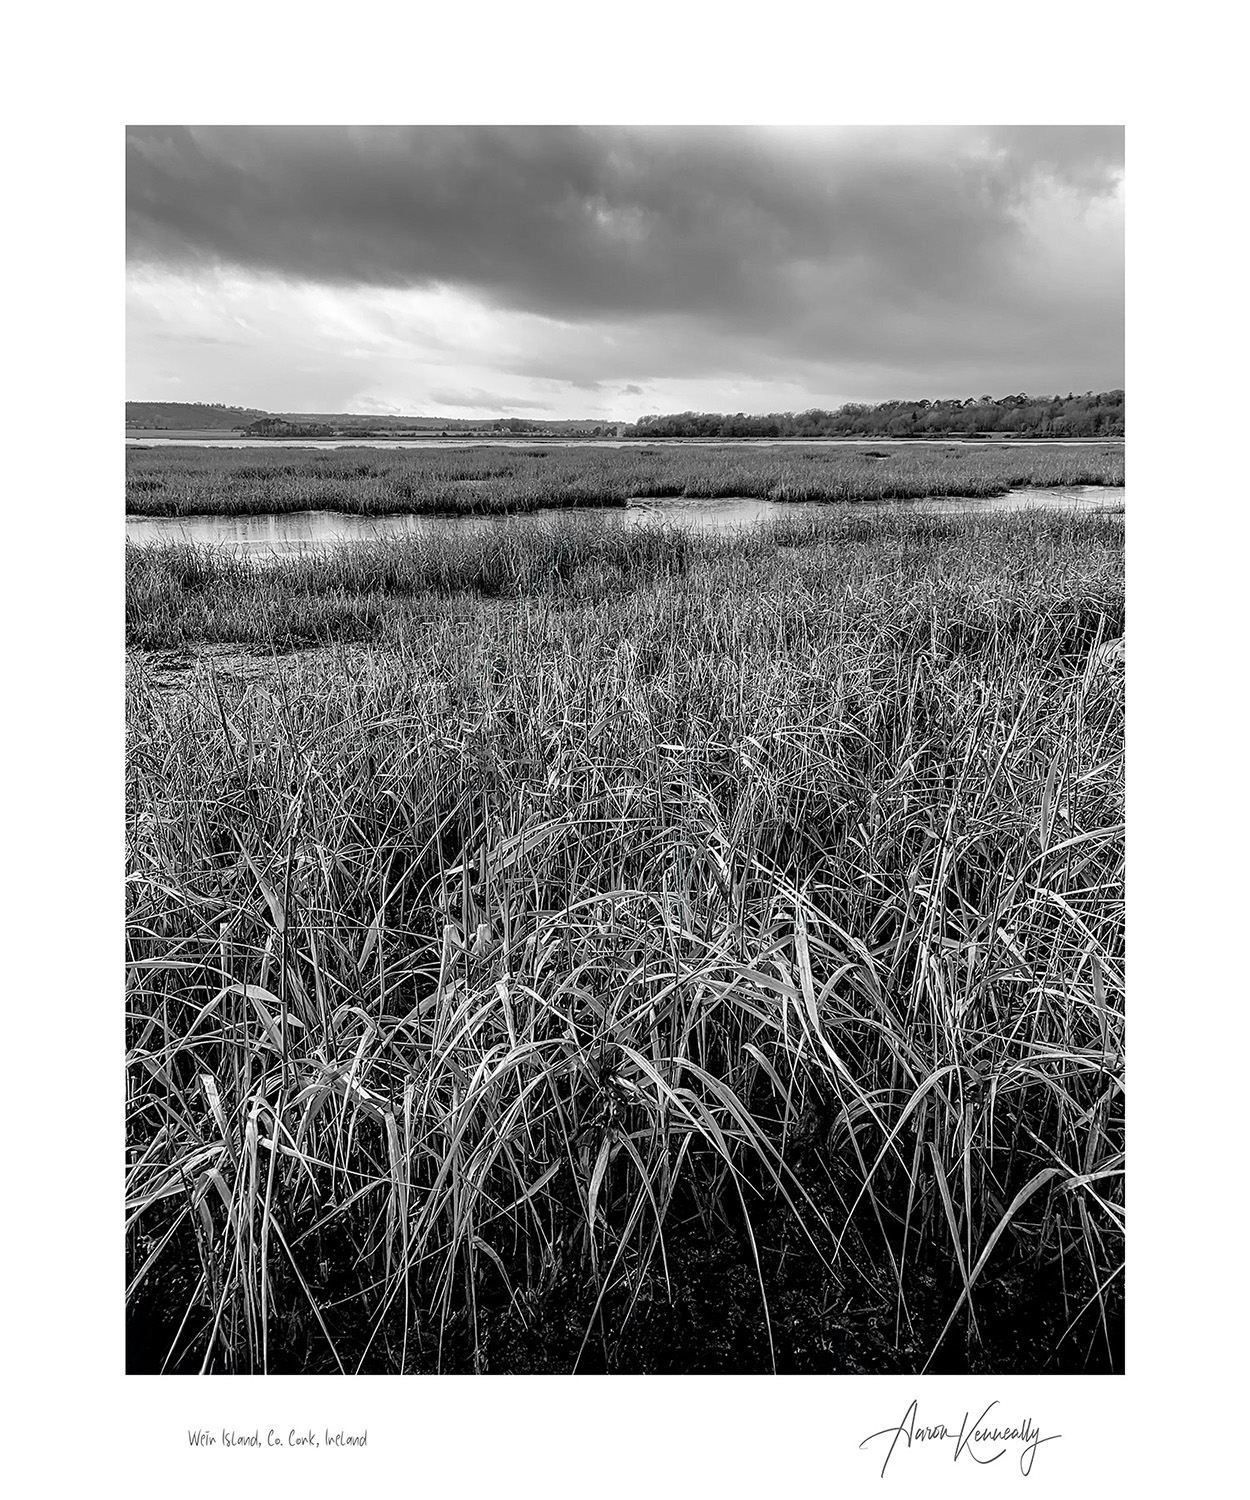 The Weir Island Grasses, Co. Cork